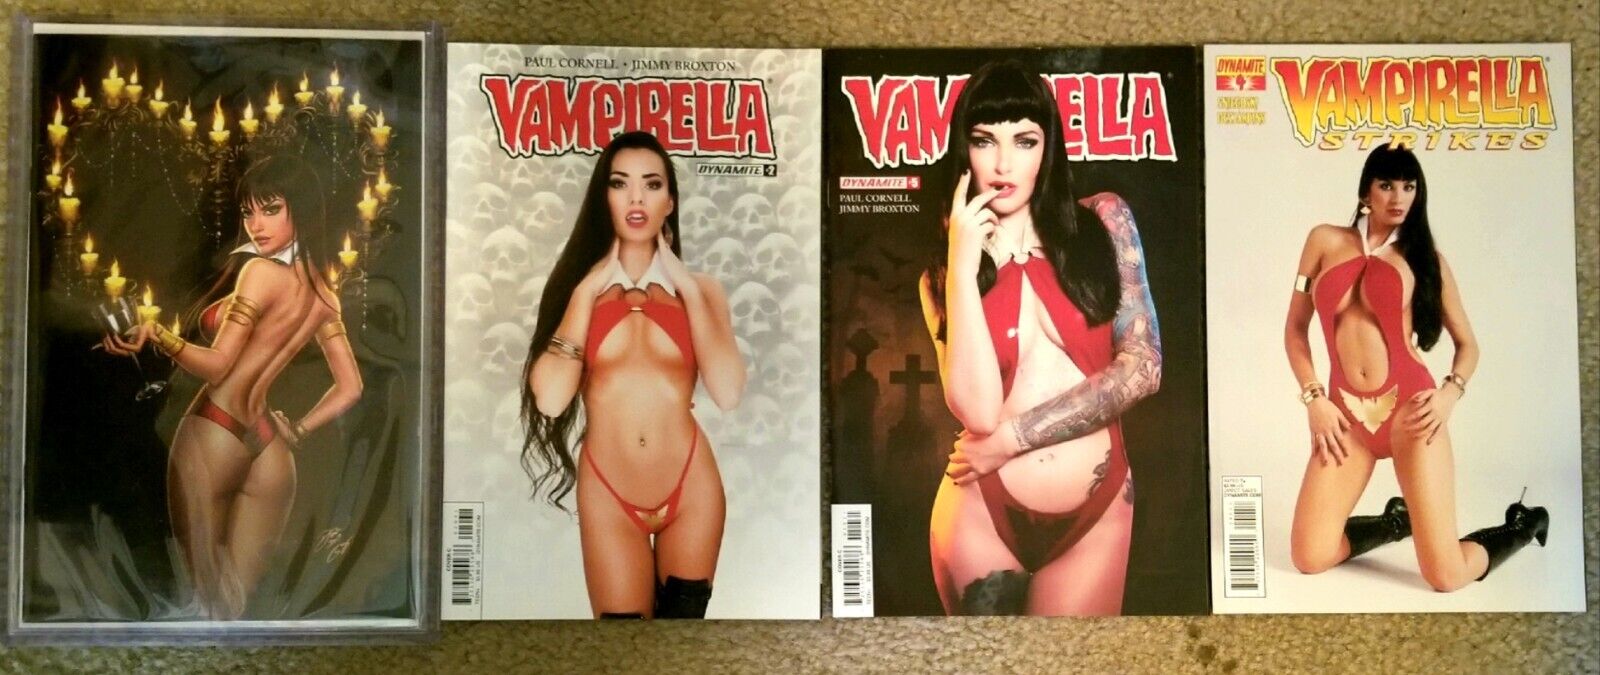 Vampirella Comics & Valentine Day Special w/ authenticity cert. Never opened.